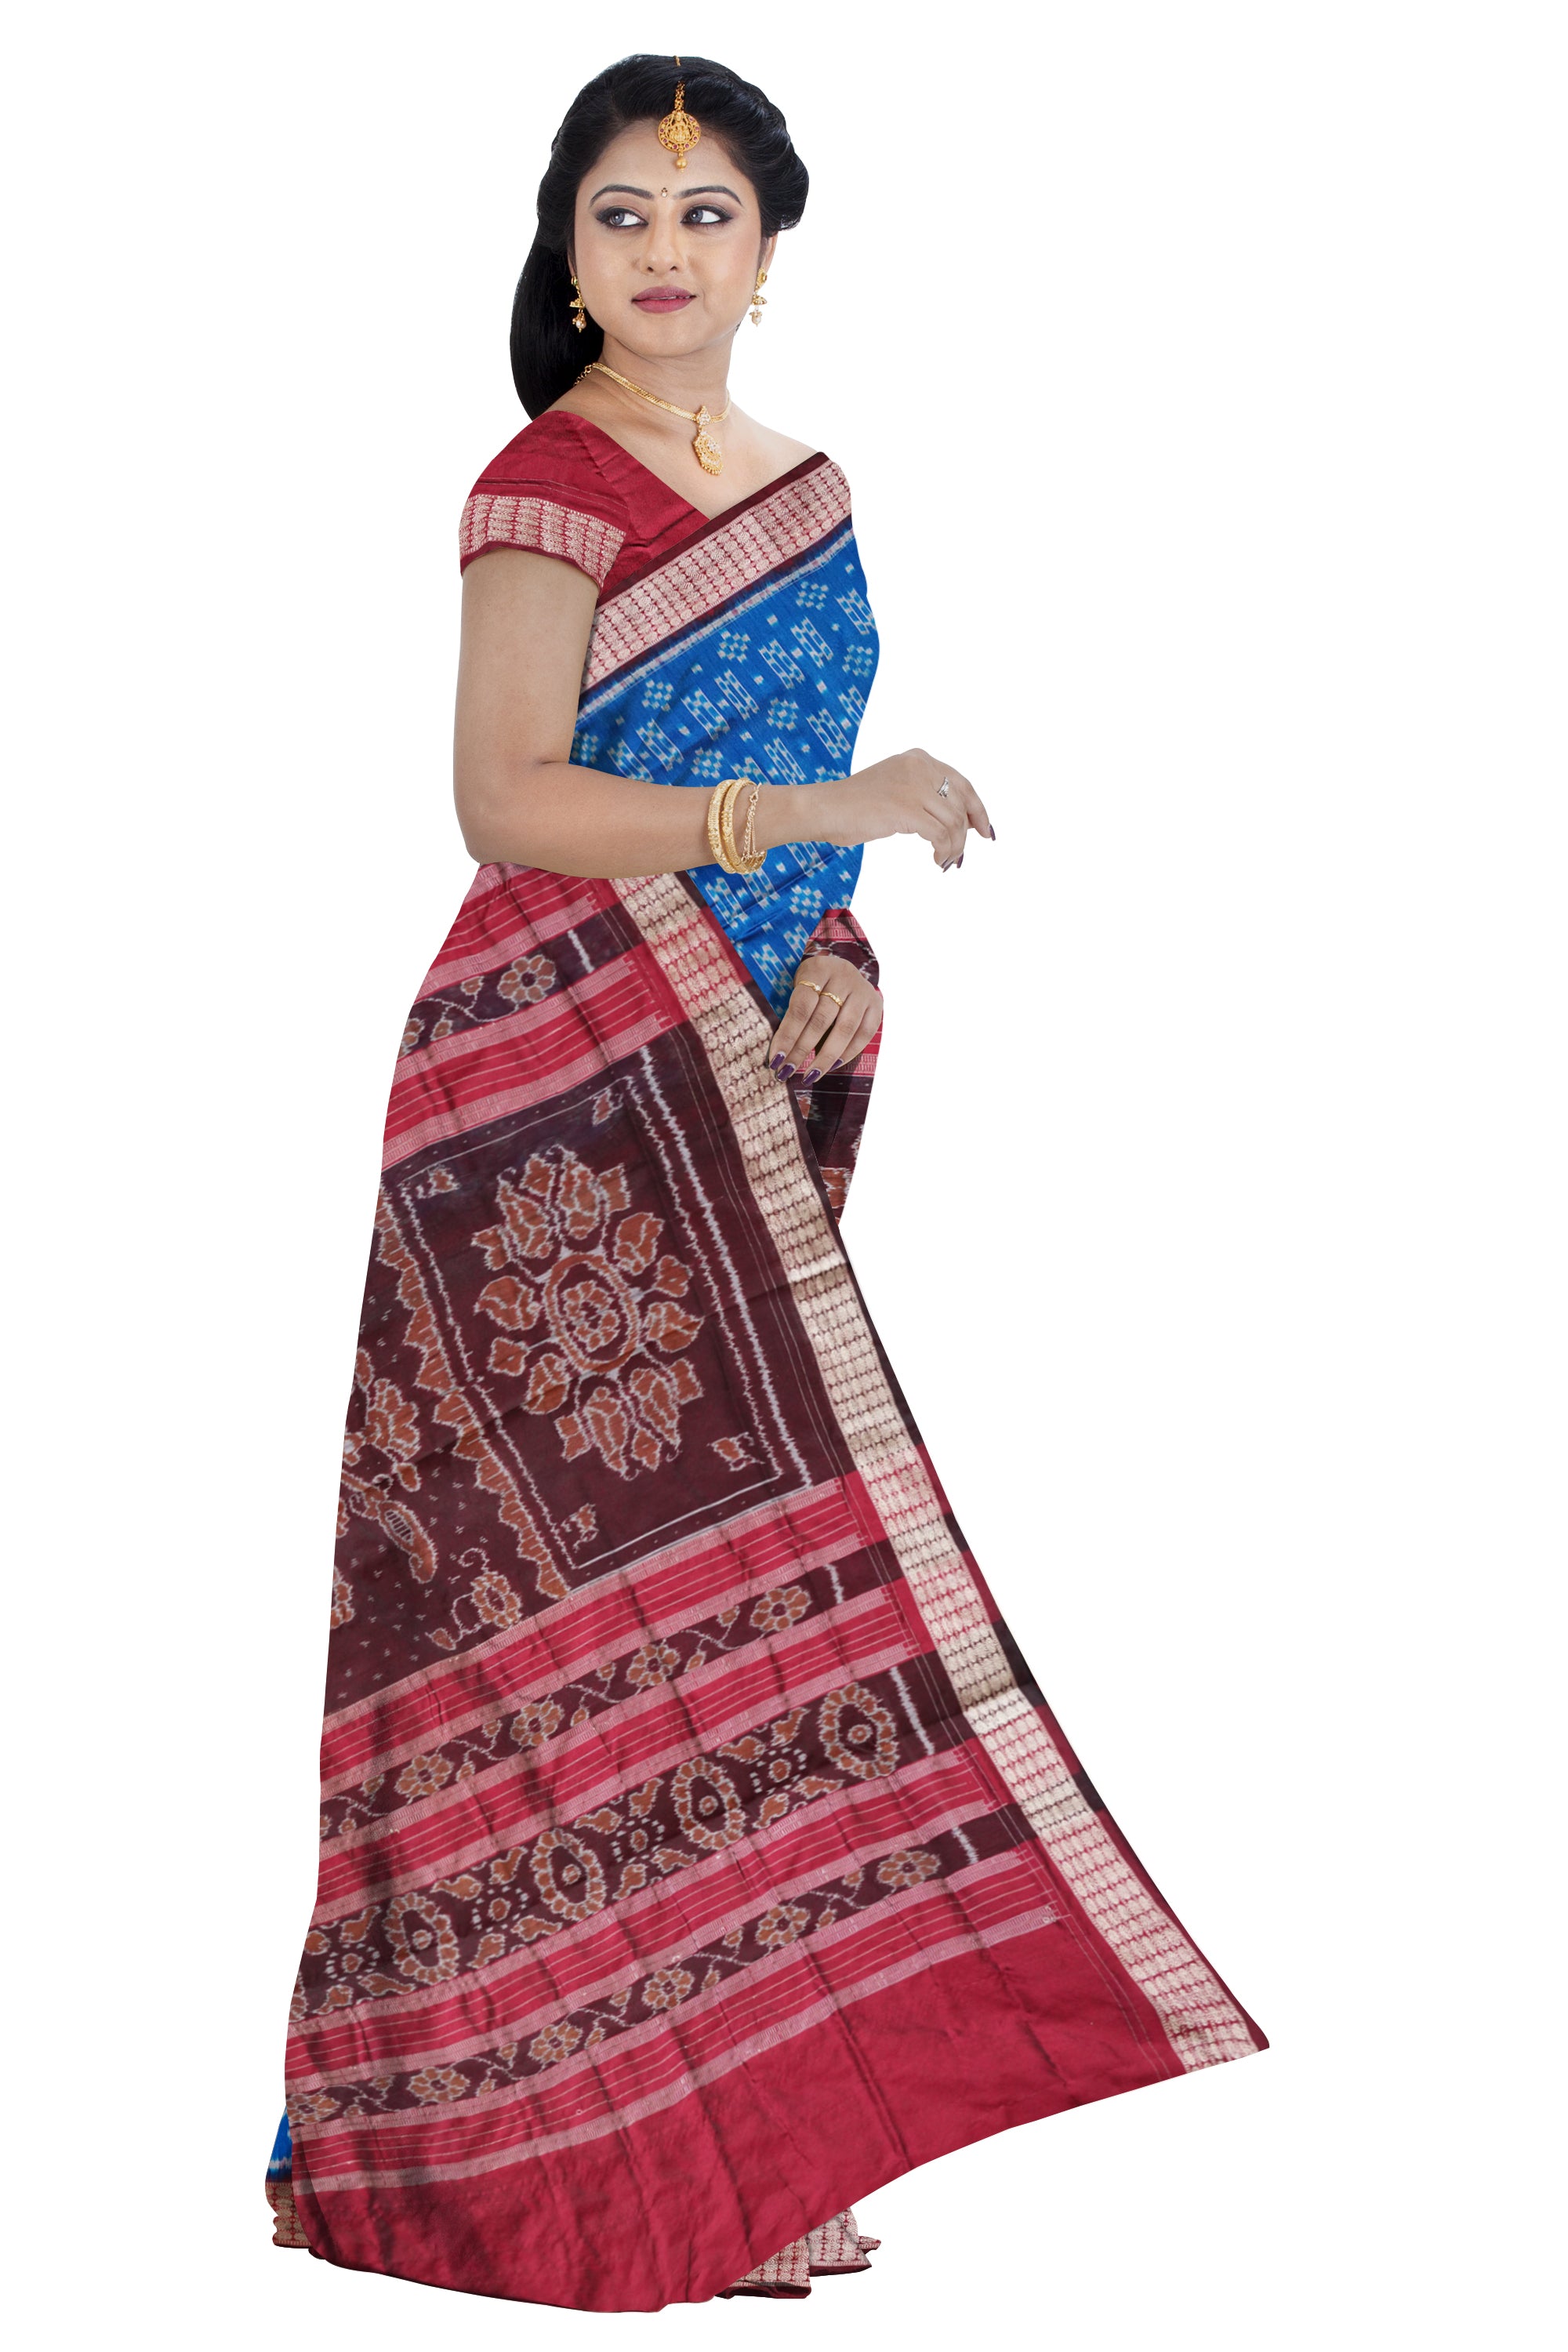 Sky-blue and maroon pasapali saree, peacock with flowers pallu. - Koshali Arts & Crafts Enterprise